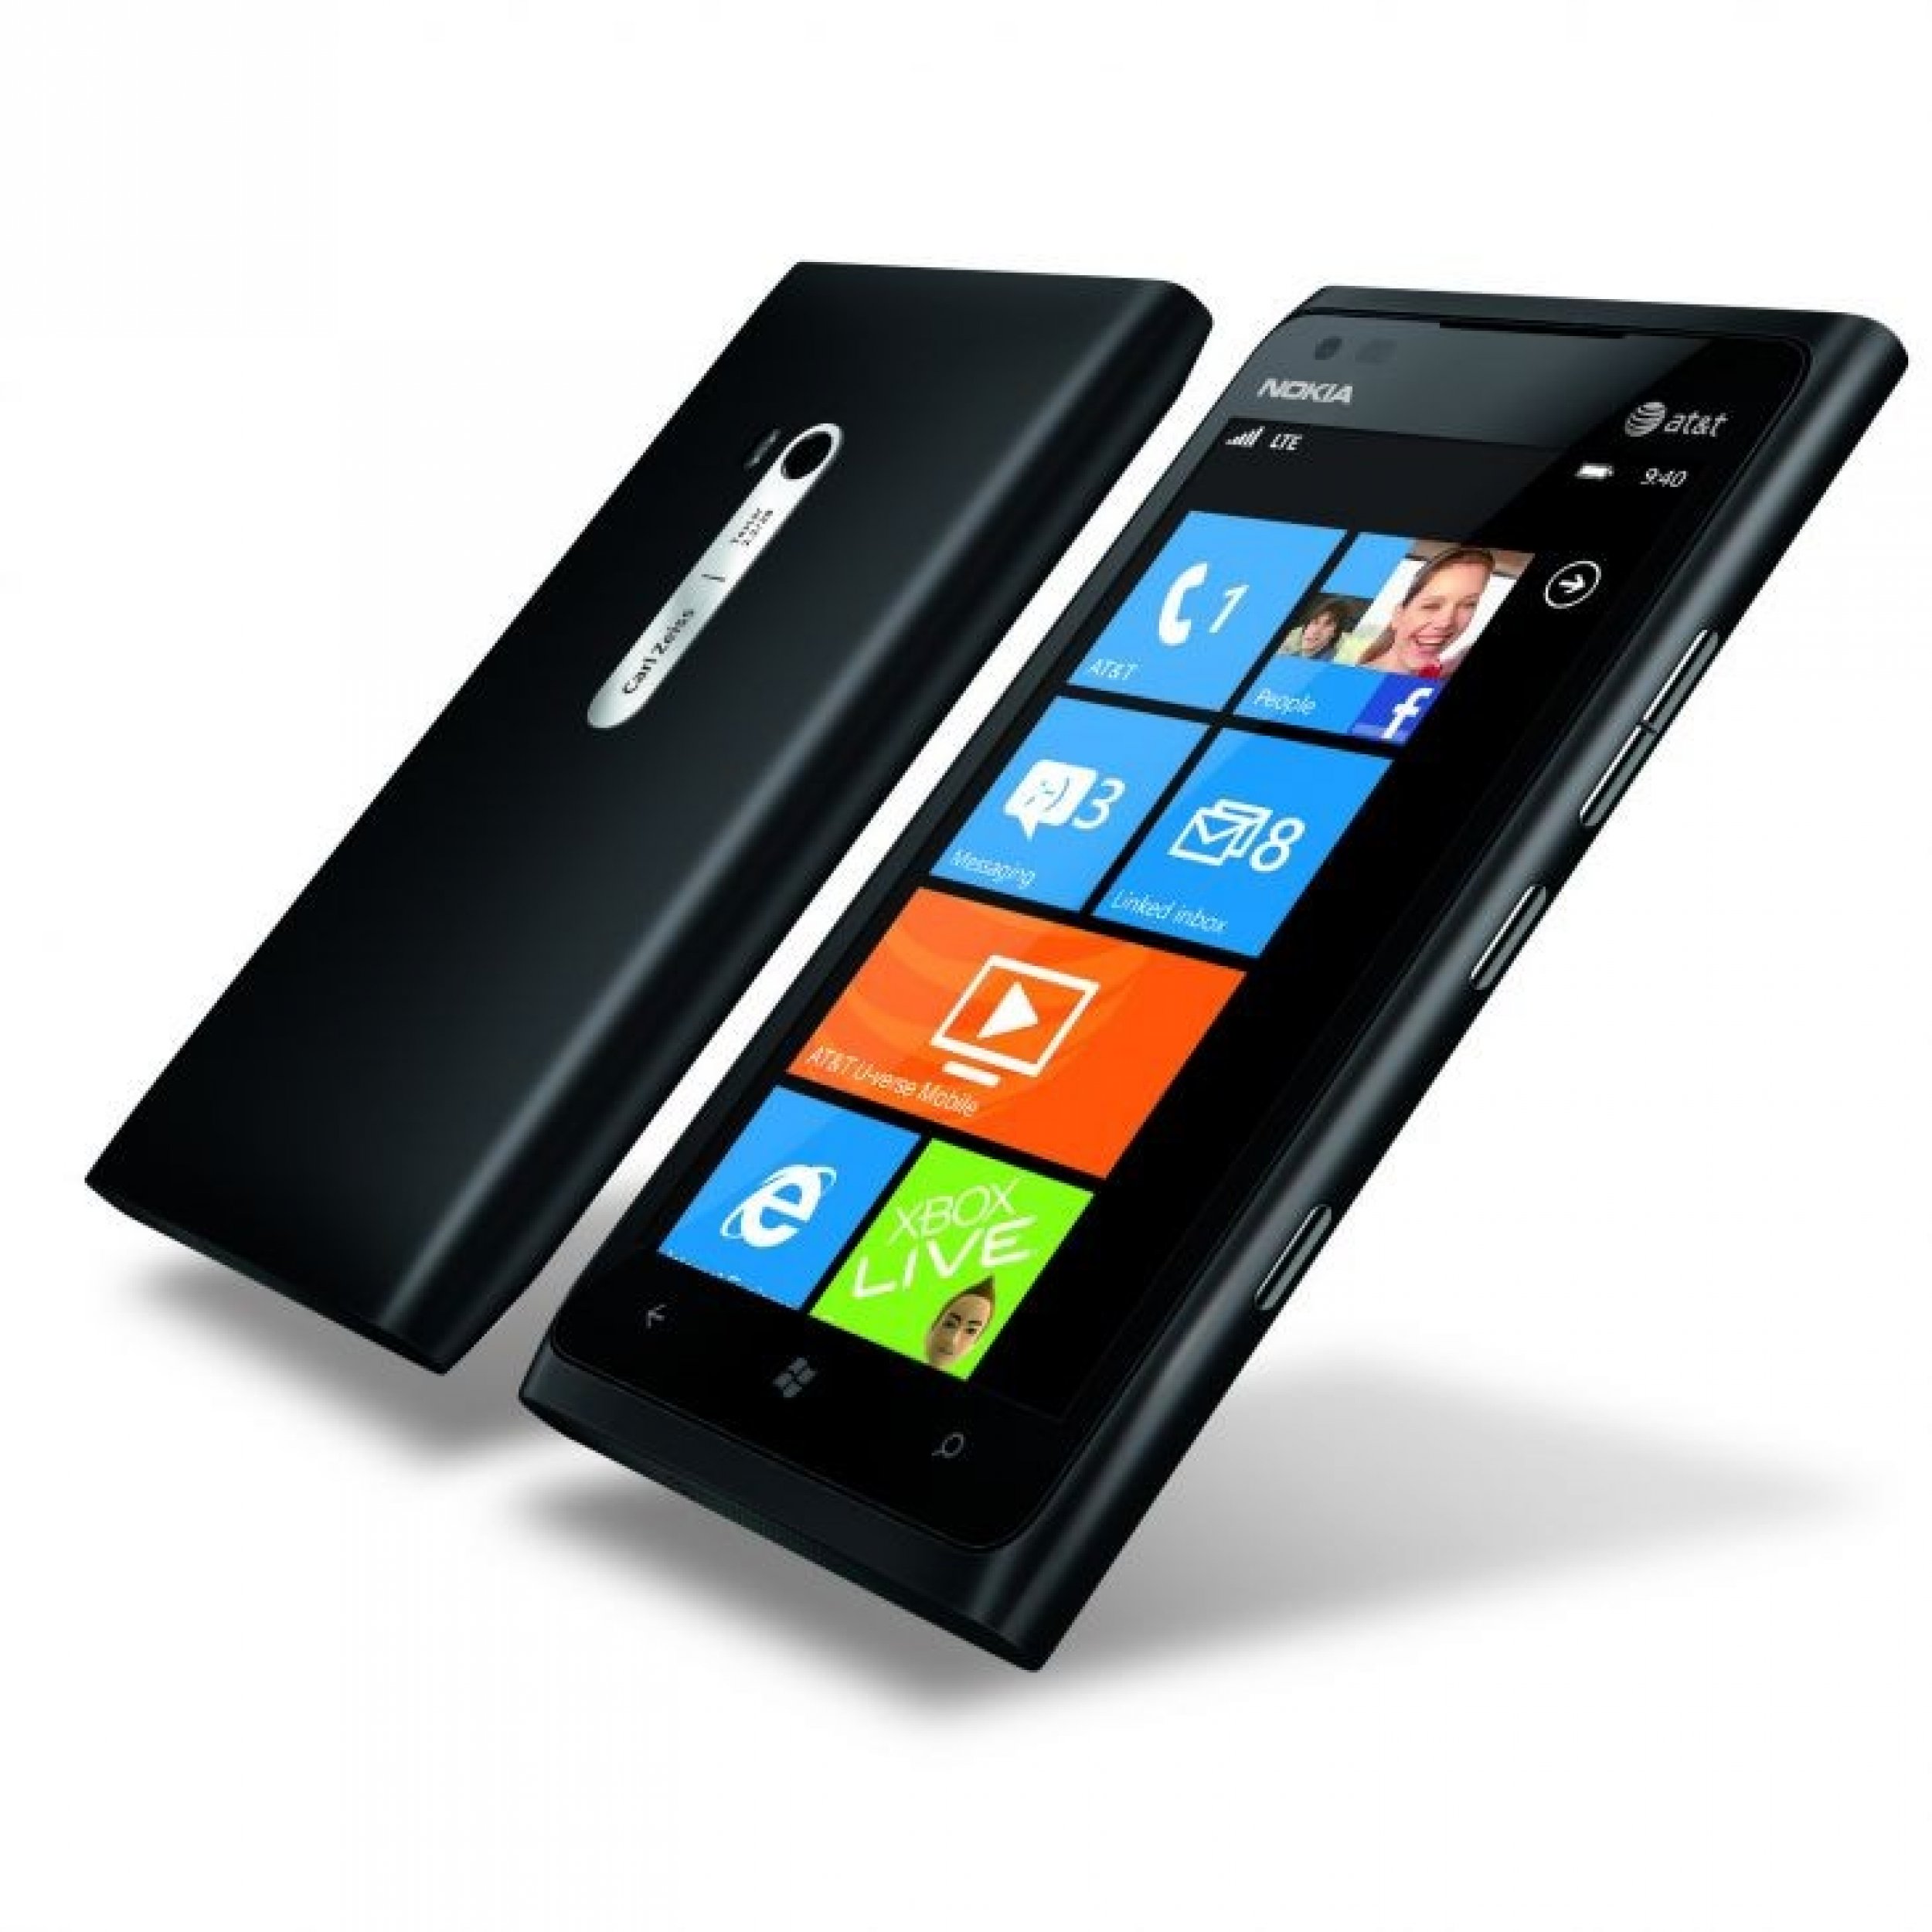 Русский телефон нокиа. Nokia Lumia 900. Нокиа люмиа 900. Nokia Lumia 2012. Nokia Lumia 910.